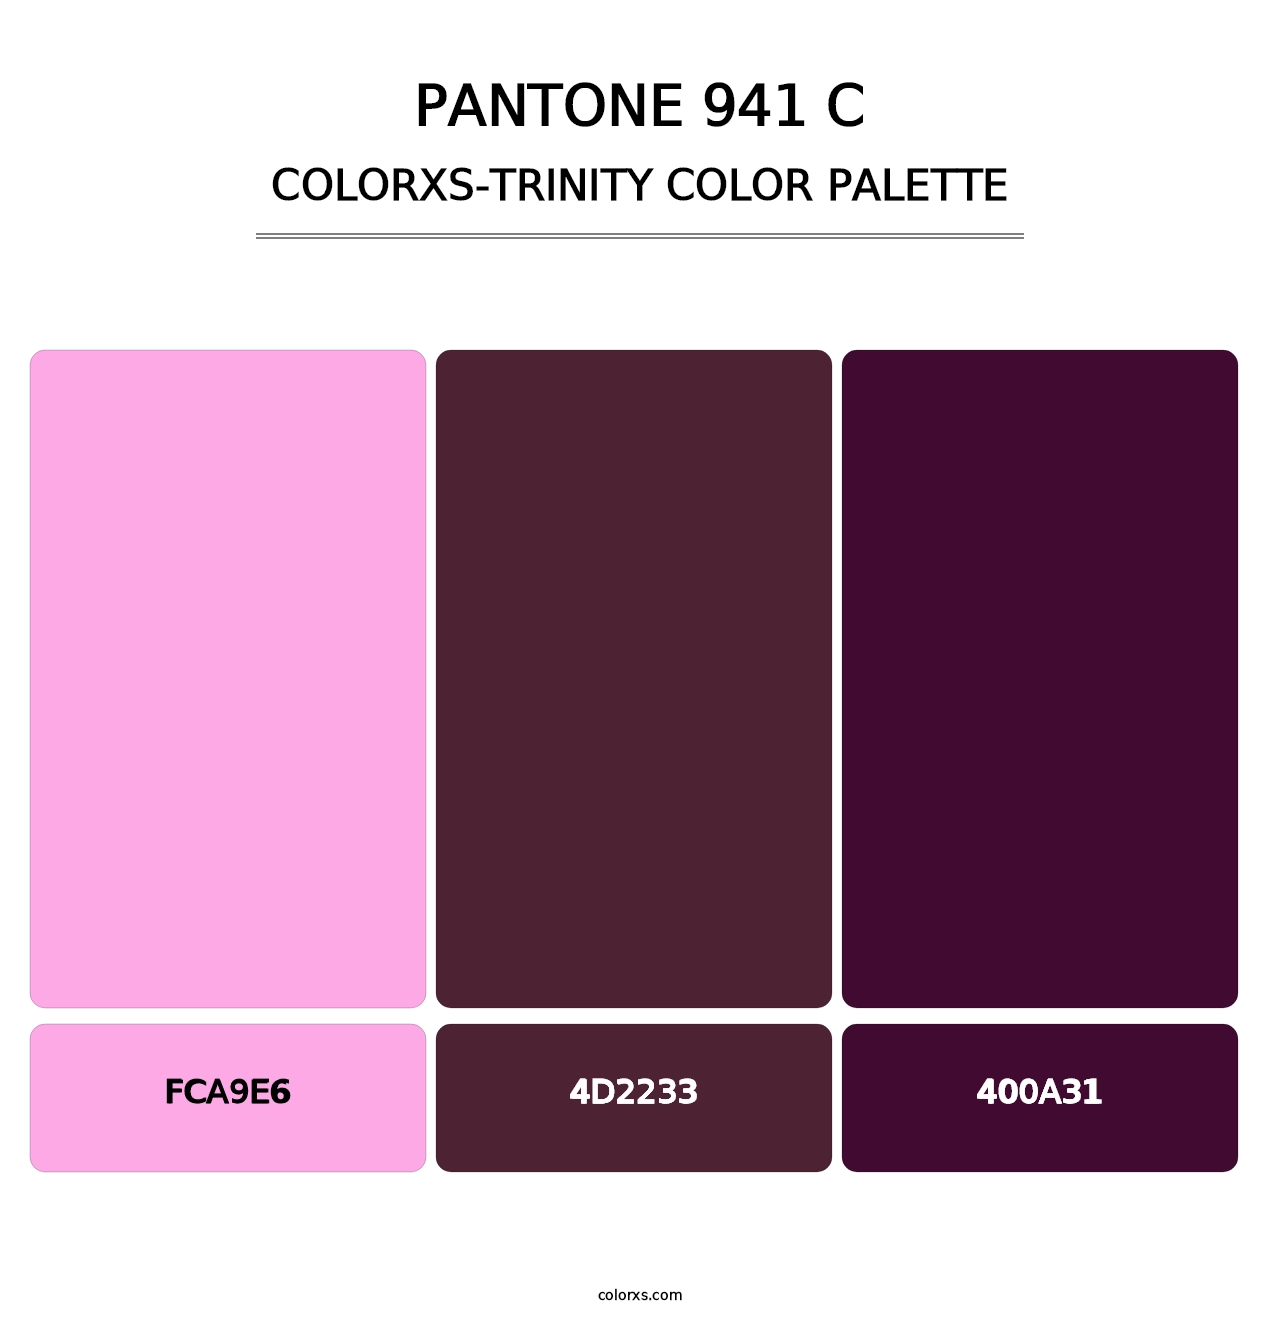 PANTONE 941 C - Colorxs Trinity Palette